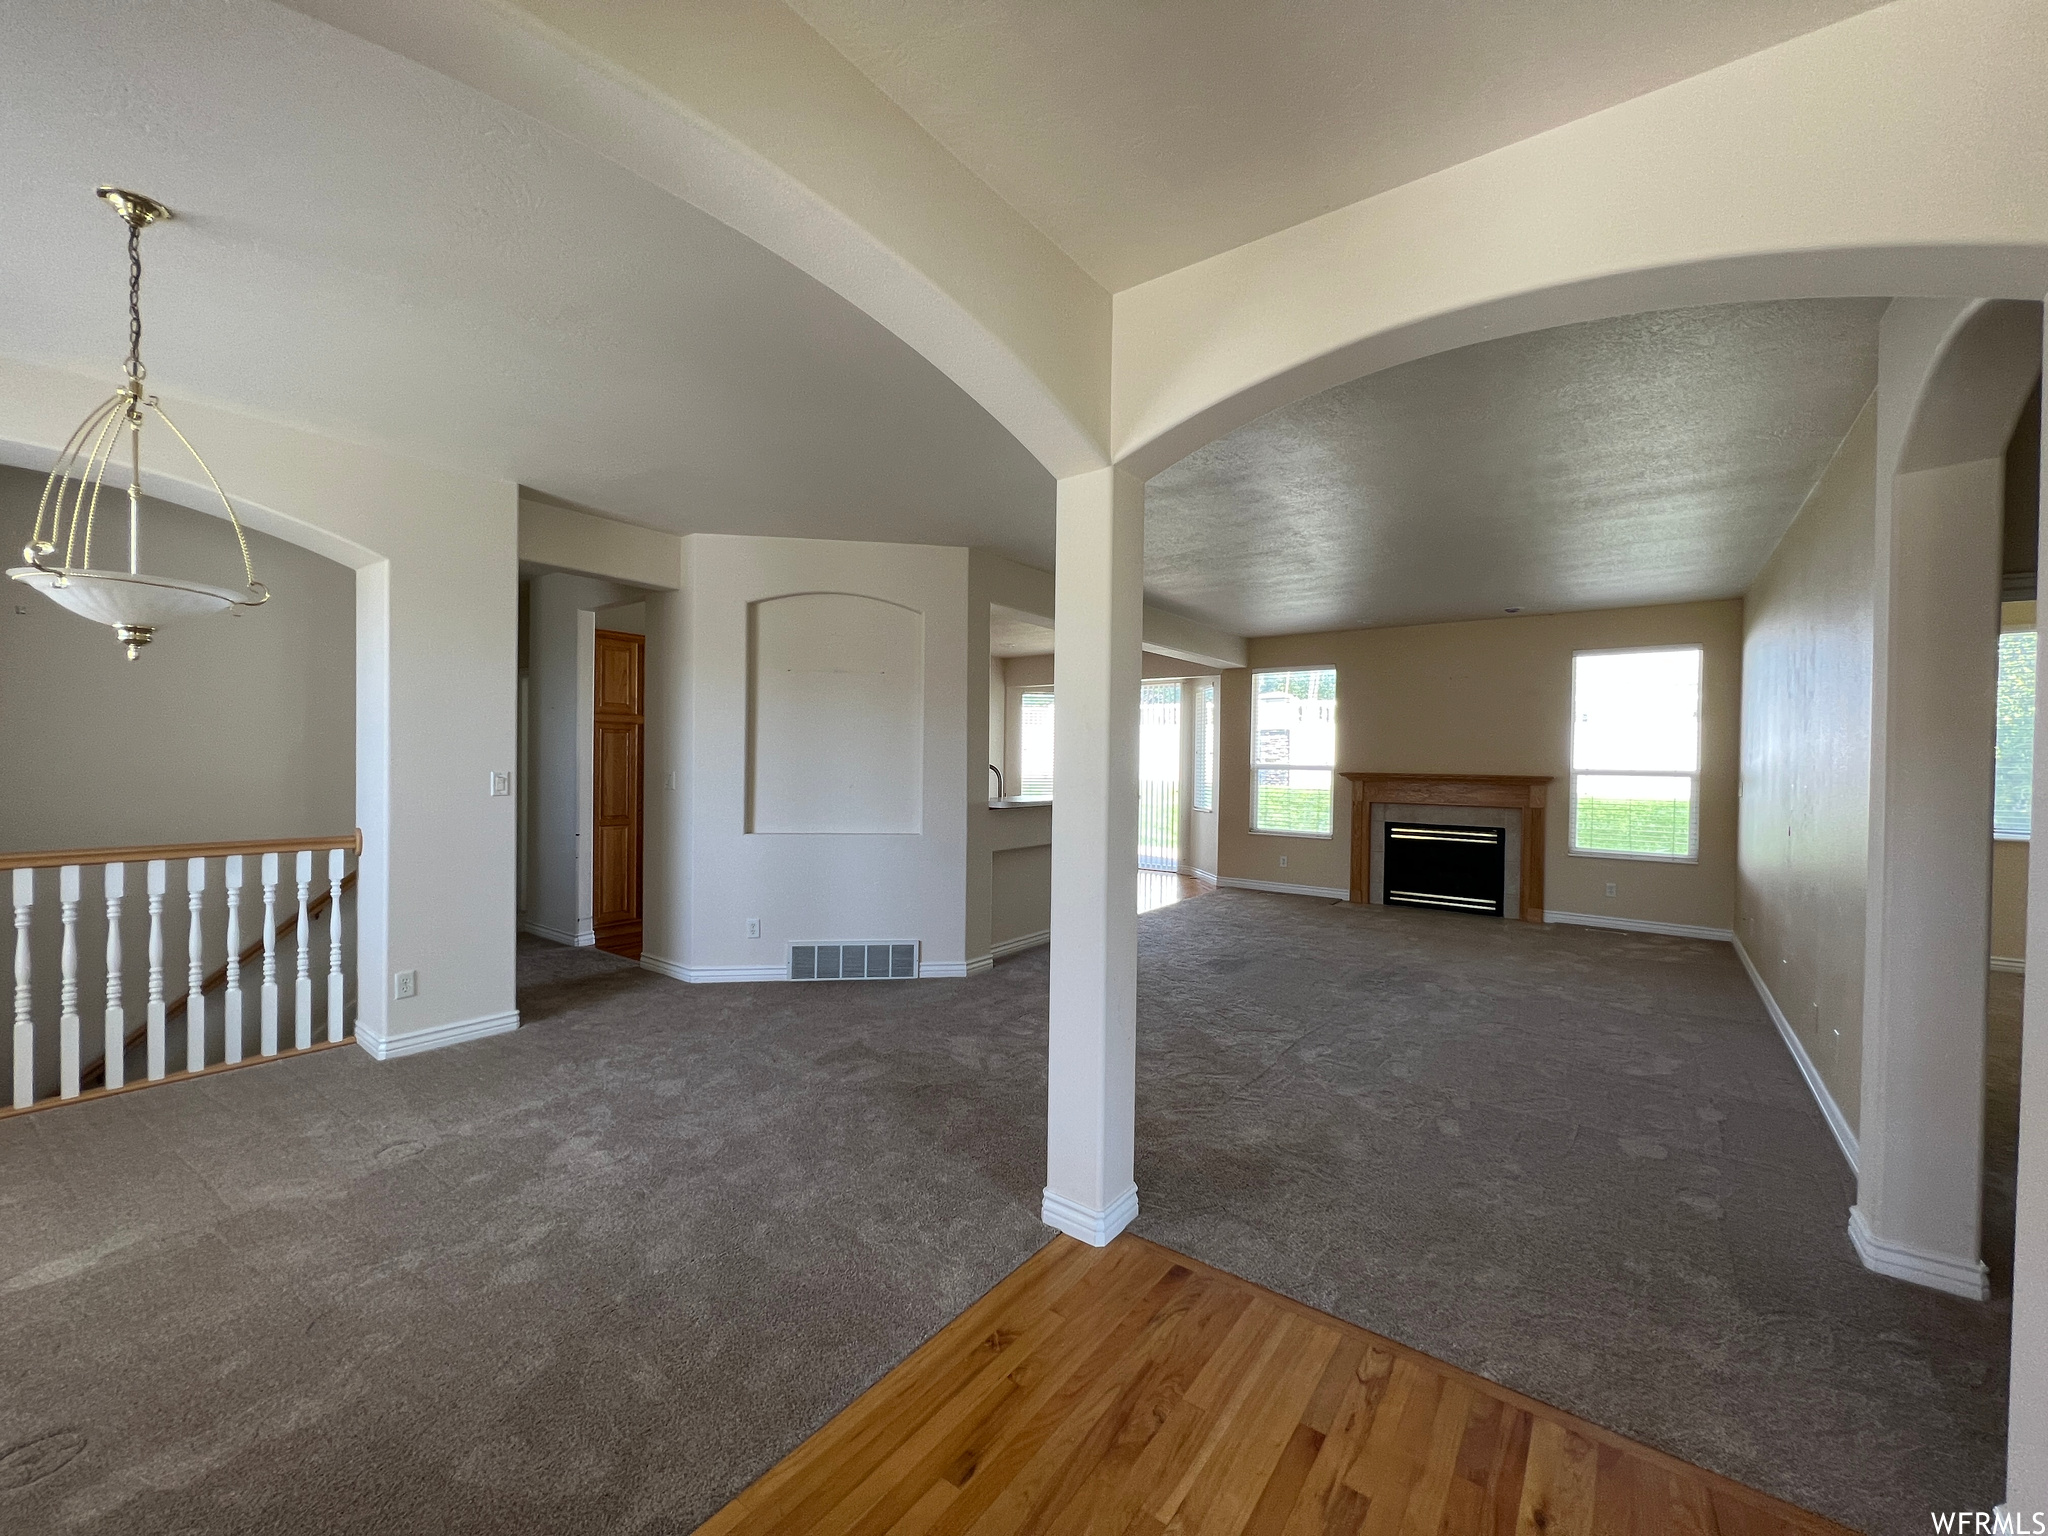 Living room with hardwood flooring